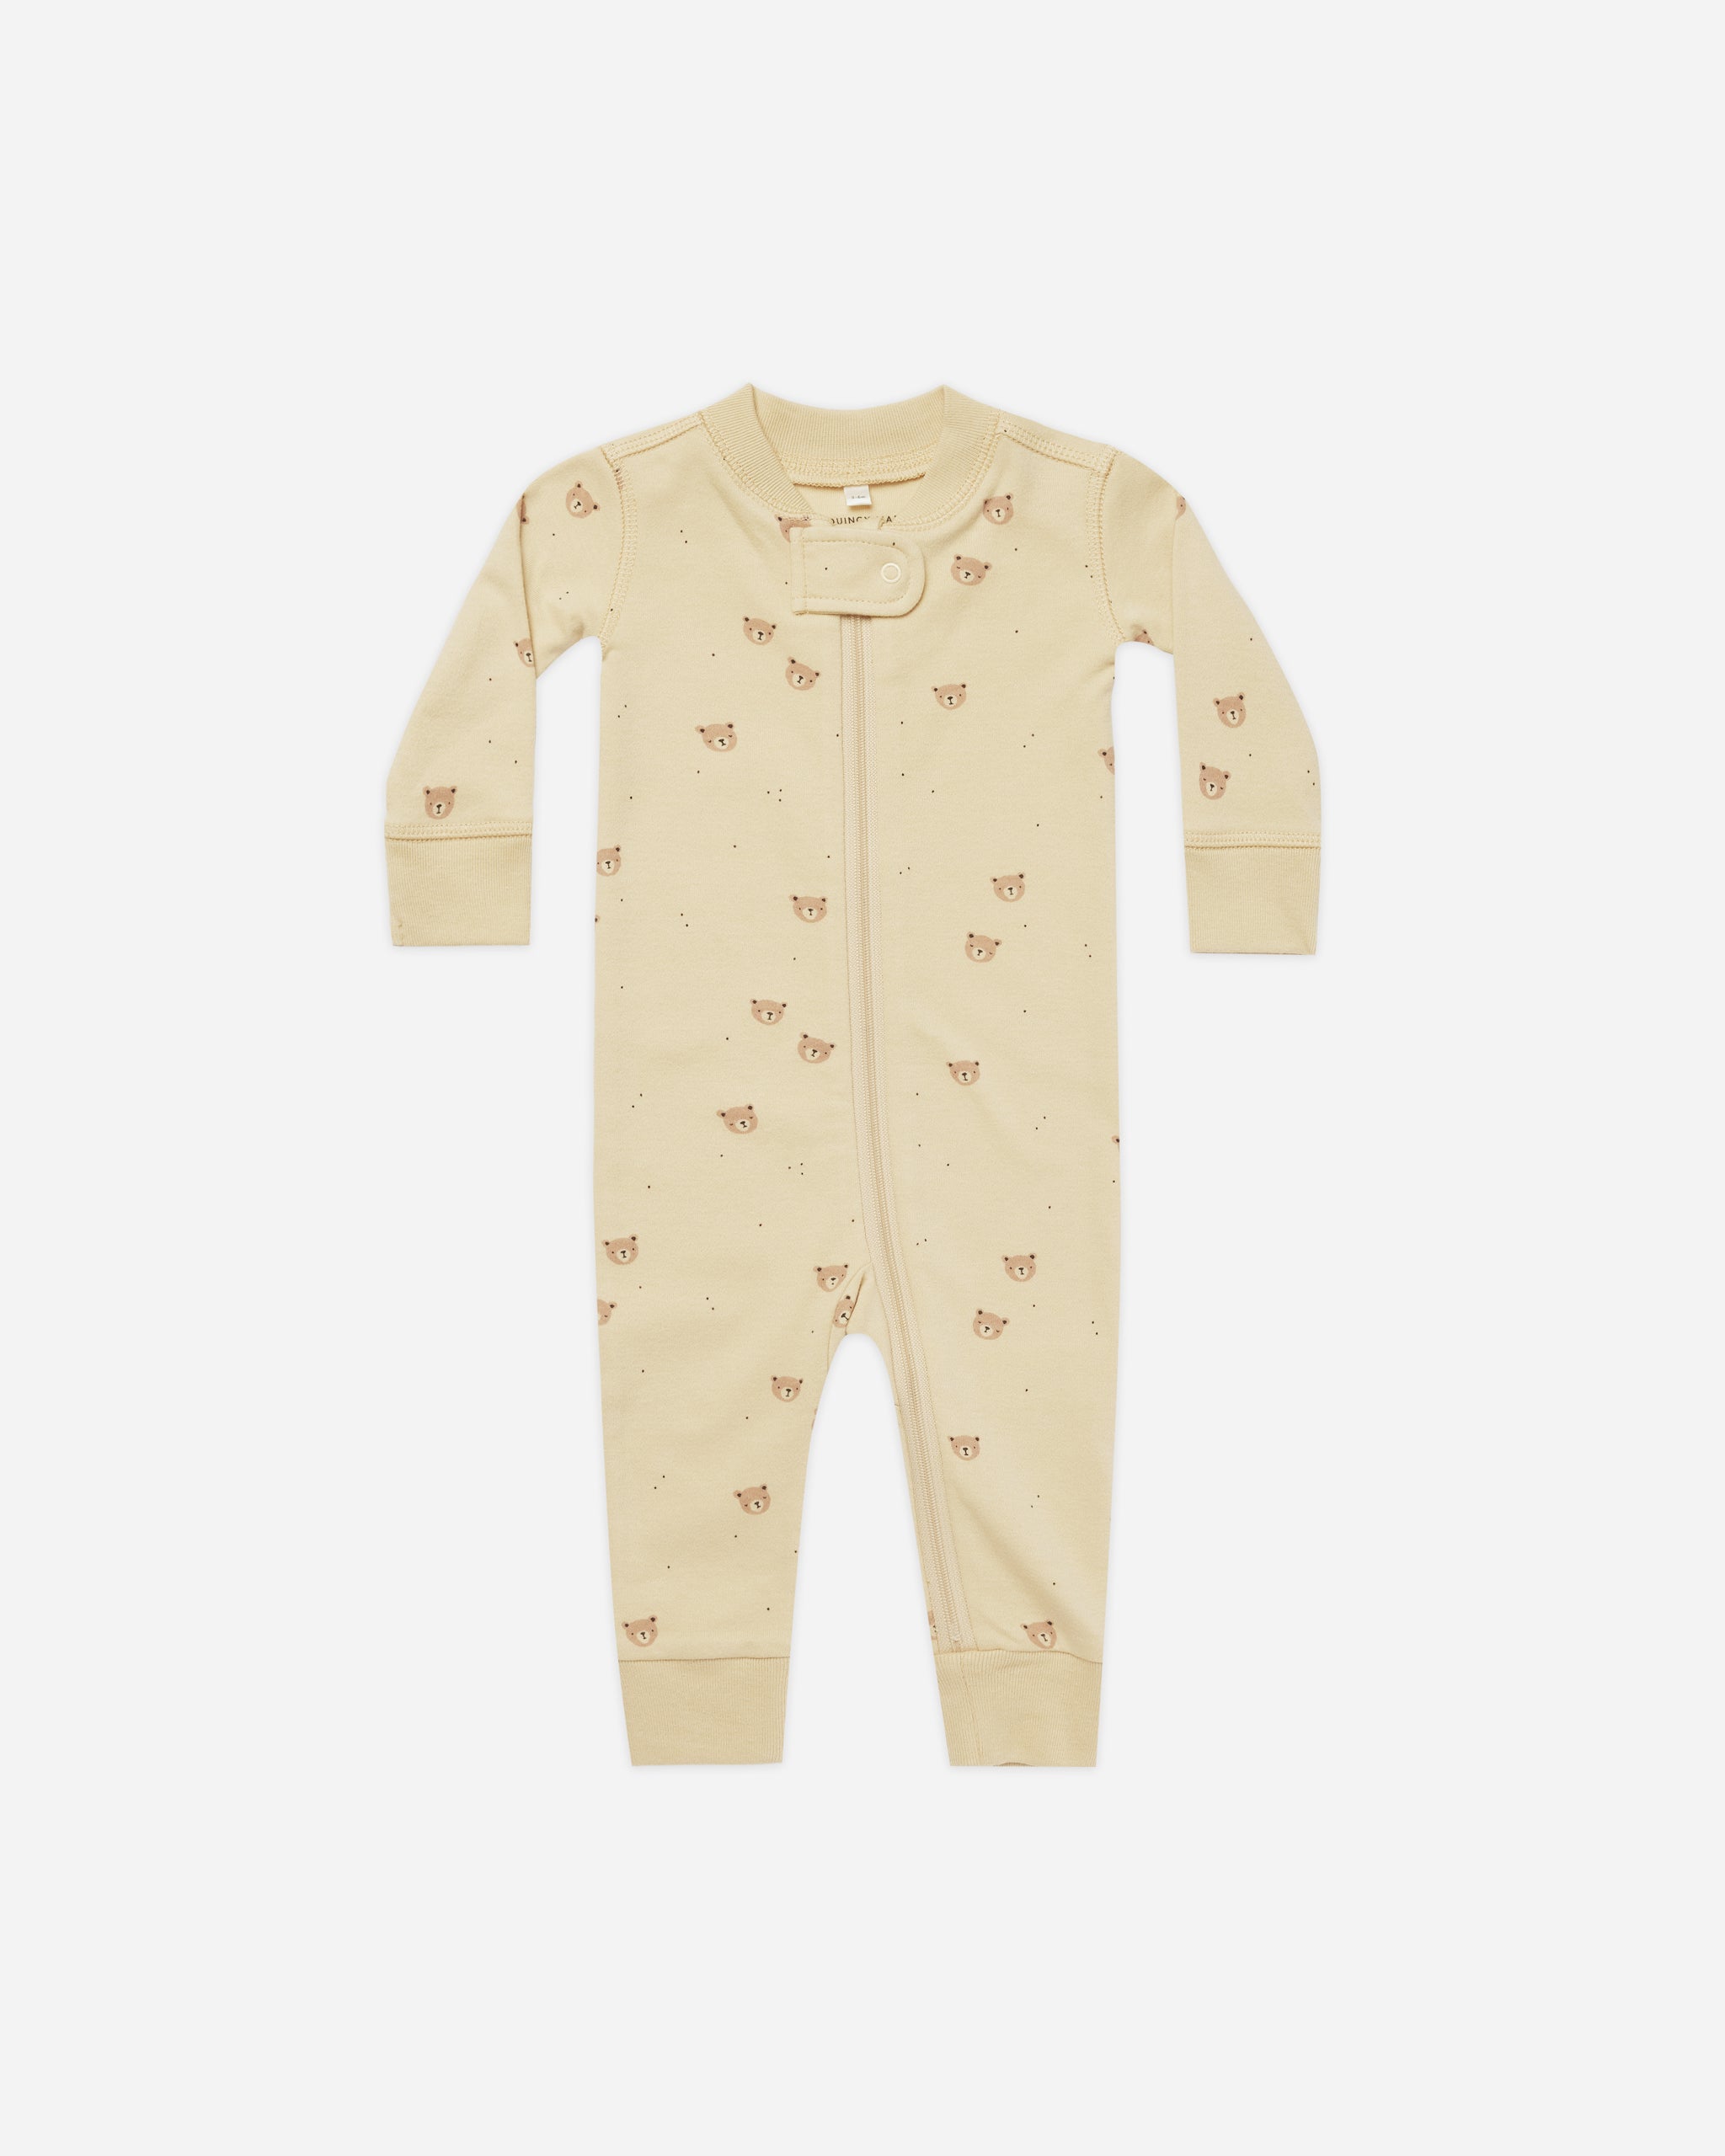 Zip Longsleeve Sleeper || Bears - Rylee + Cru | Kids Clothes | Trendy Baby Clothes | Modern Infant Outfits |